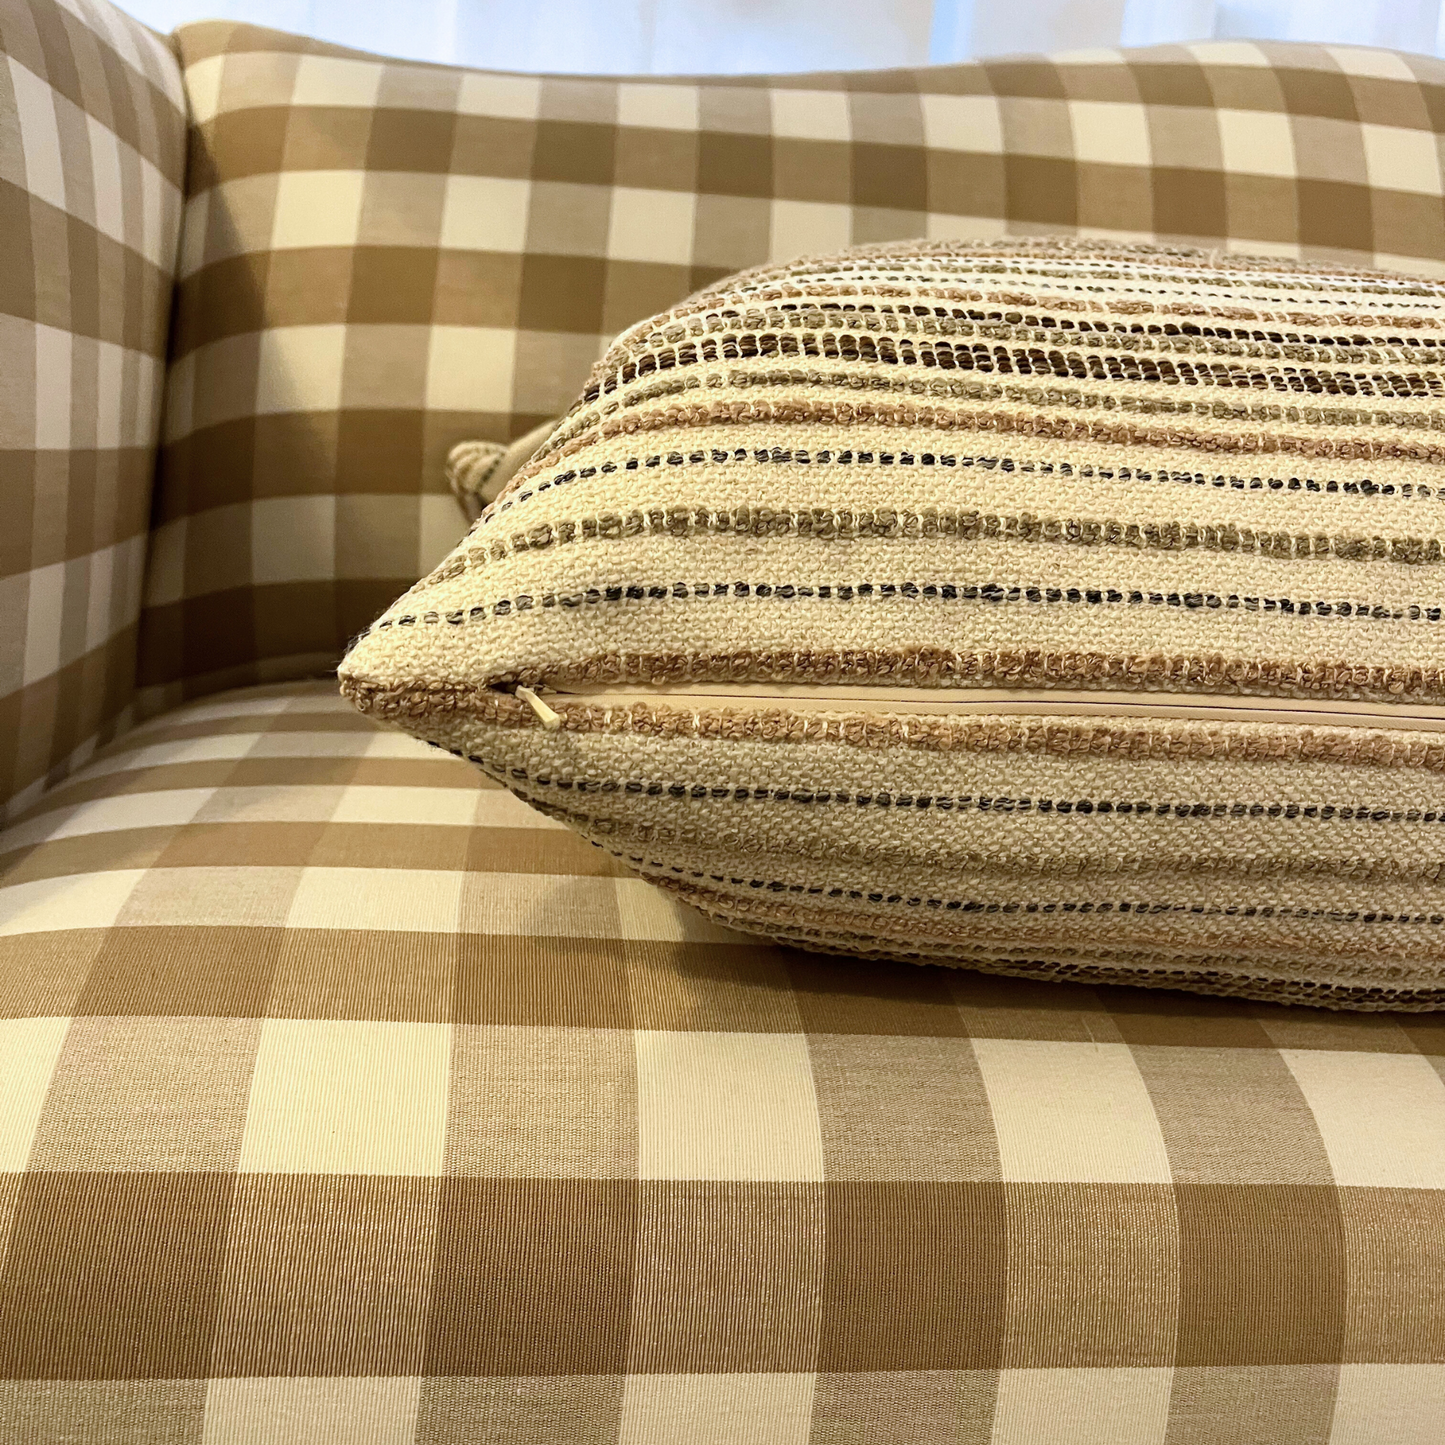 22" x 22" Pillow - Bernhardt Black and Sand Stripe